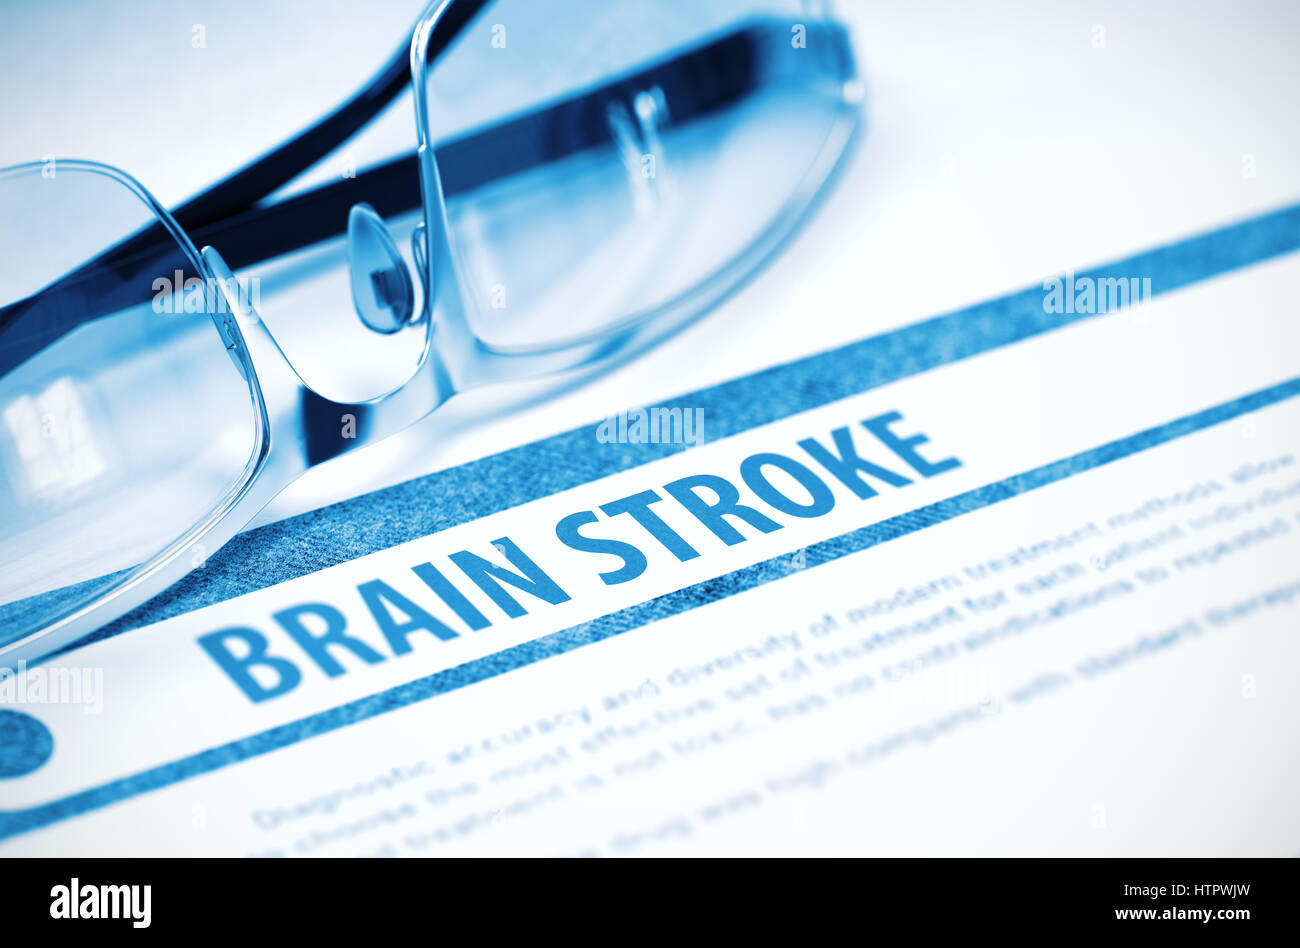 Diagnosis - Brain Stroke. Medicine Concept. 3D Illustration. Stock Photo